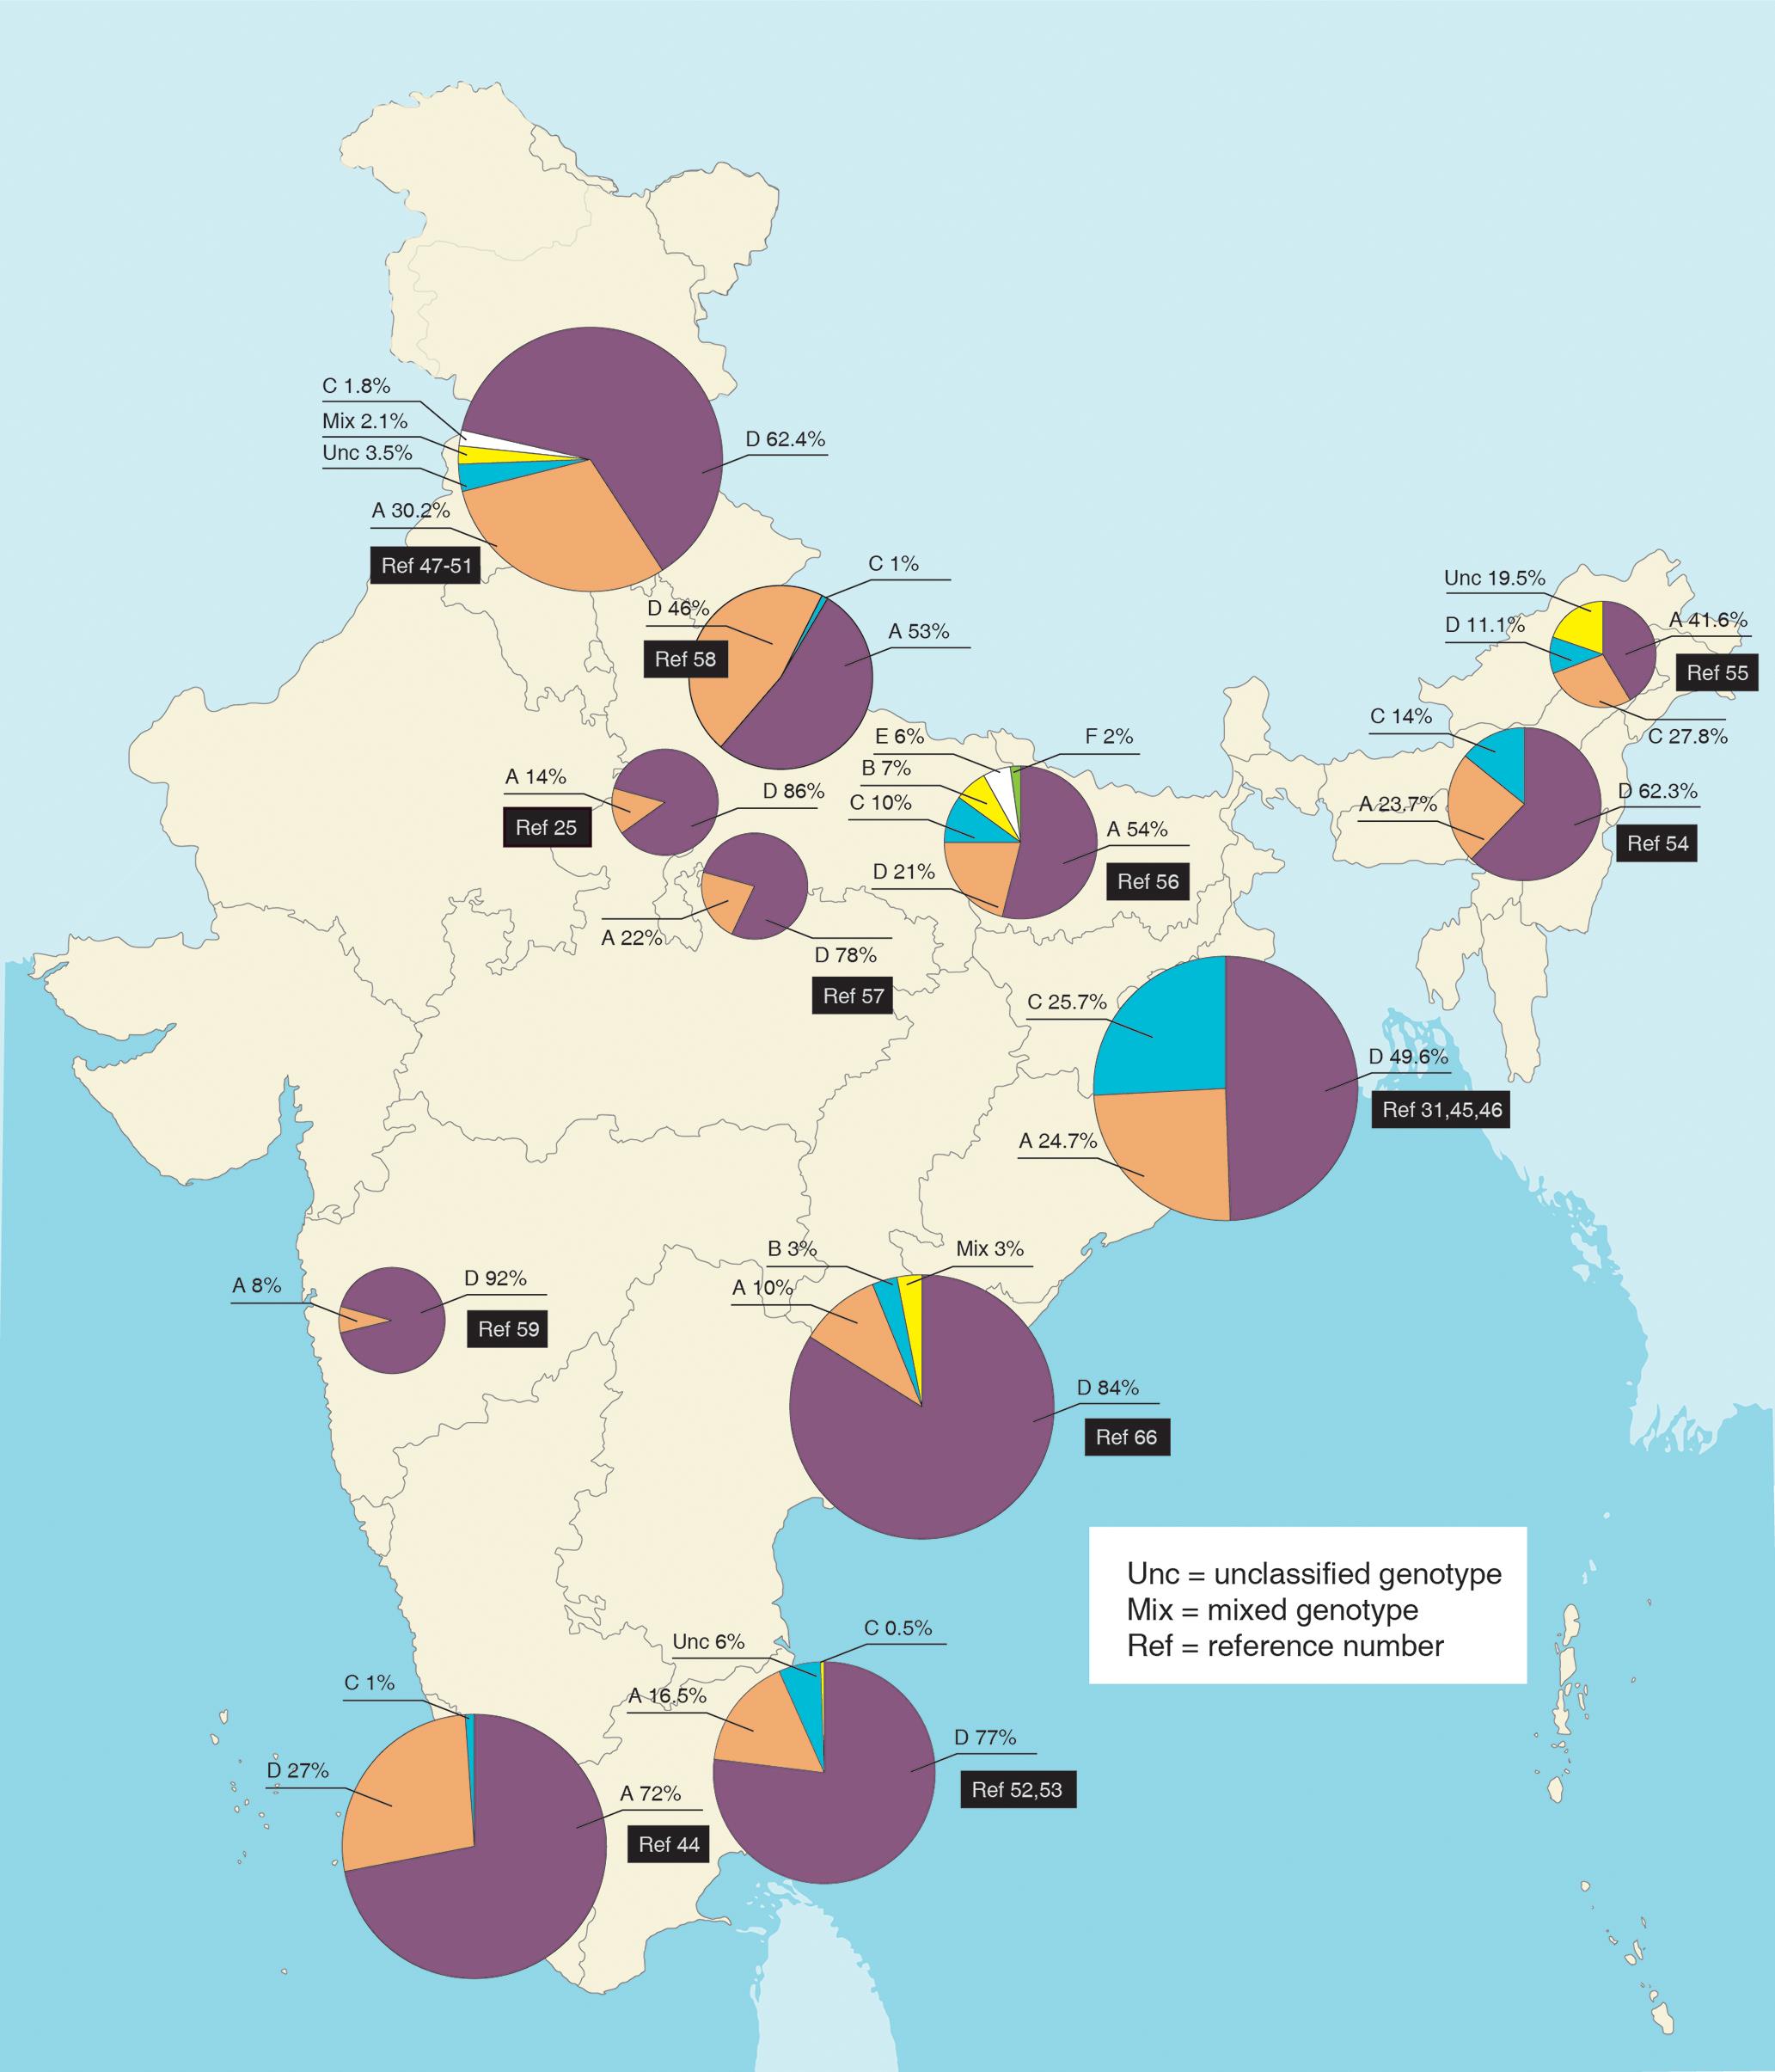 Genotypic distribution of hepatitis B virus in different parts of India.